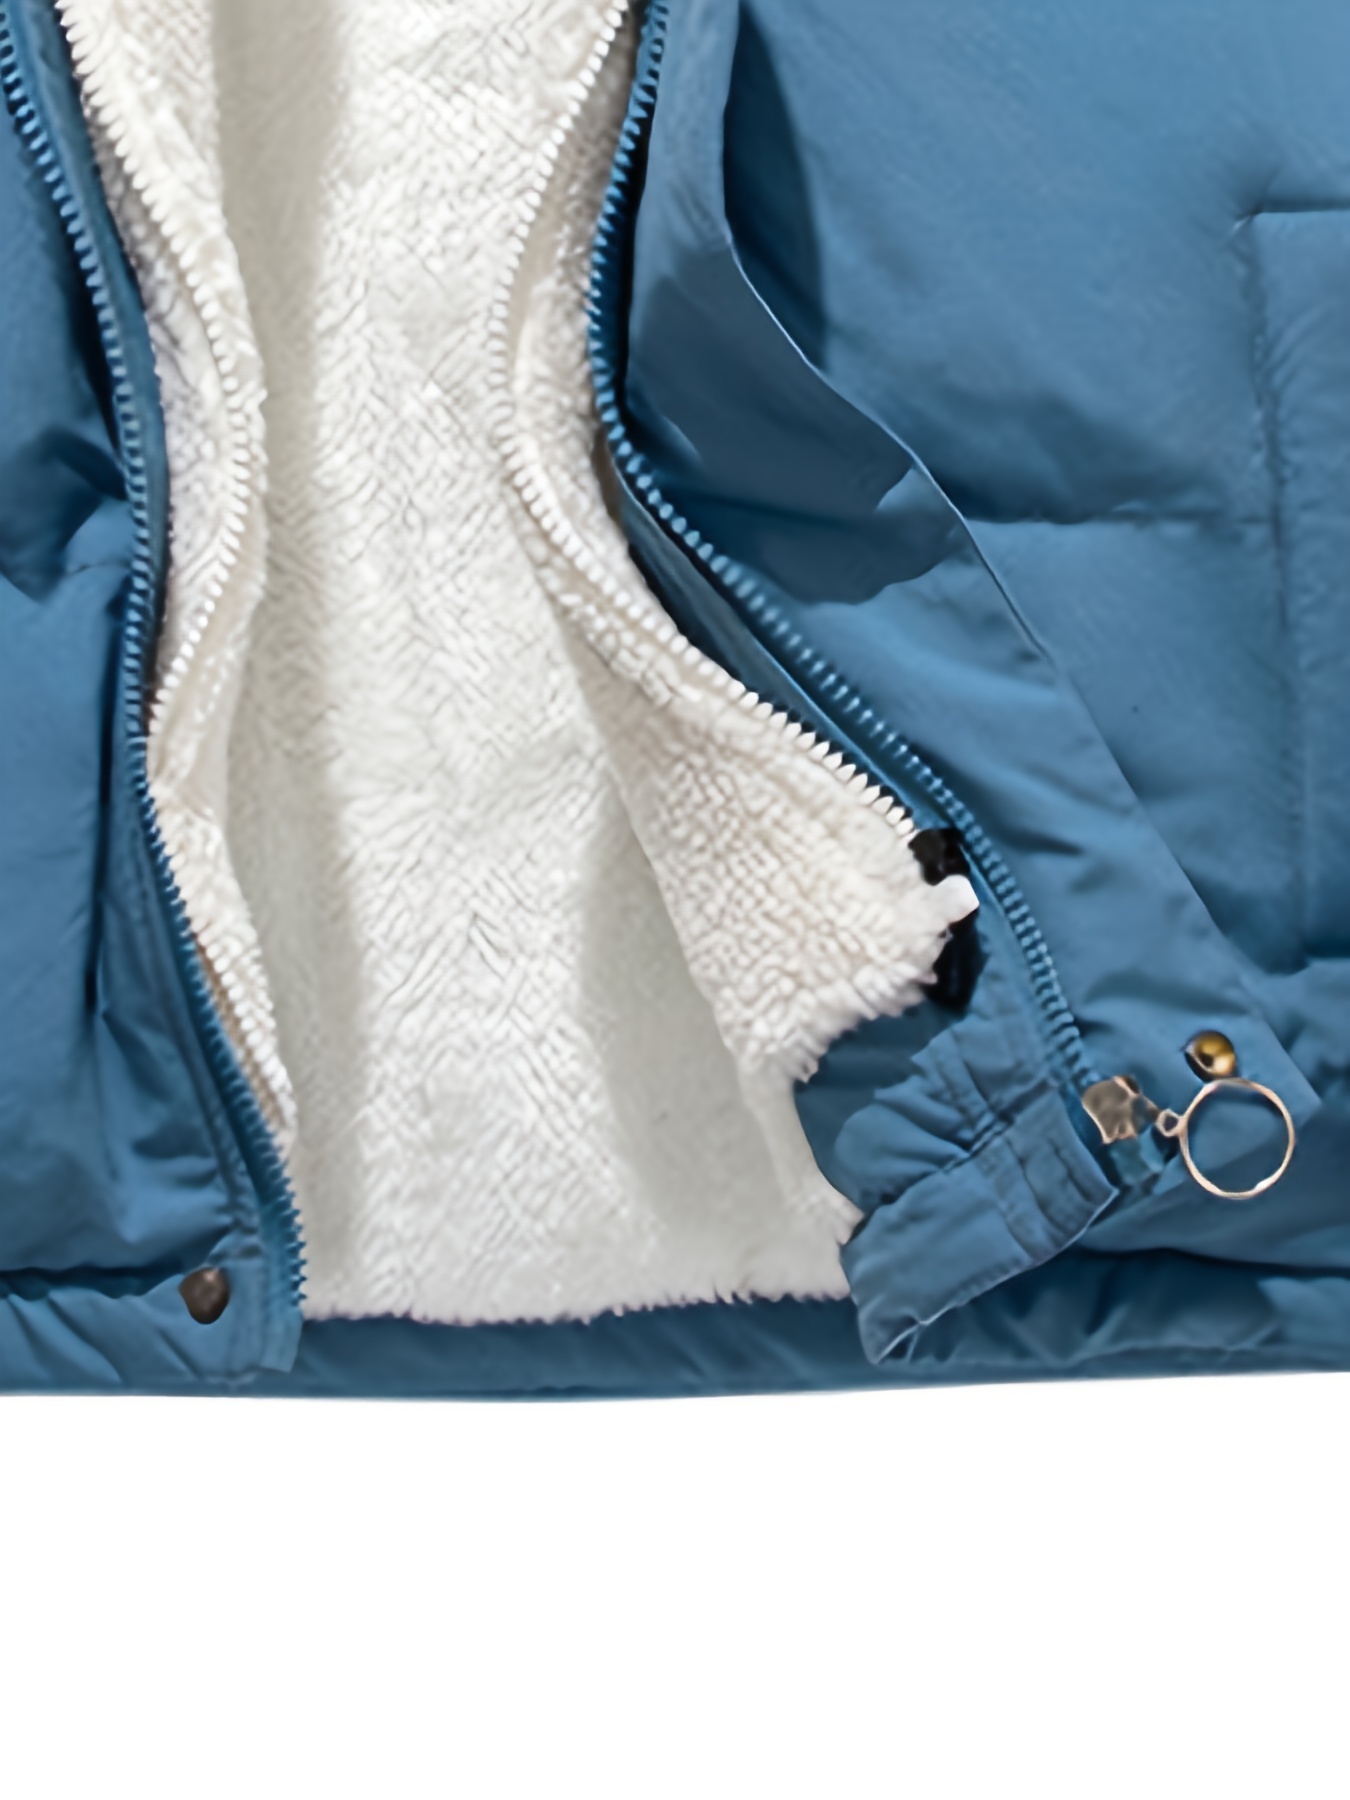  RTRDE Mens Winter Coats, Thick Thermal Zip Up Jacket Fleece  Lined Coats For Men Outwear Work Jacket Men's Coats With Lightweight Jacket  Chaquetas De Invierno Para Jackets Coats (M, Navy) 